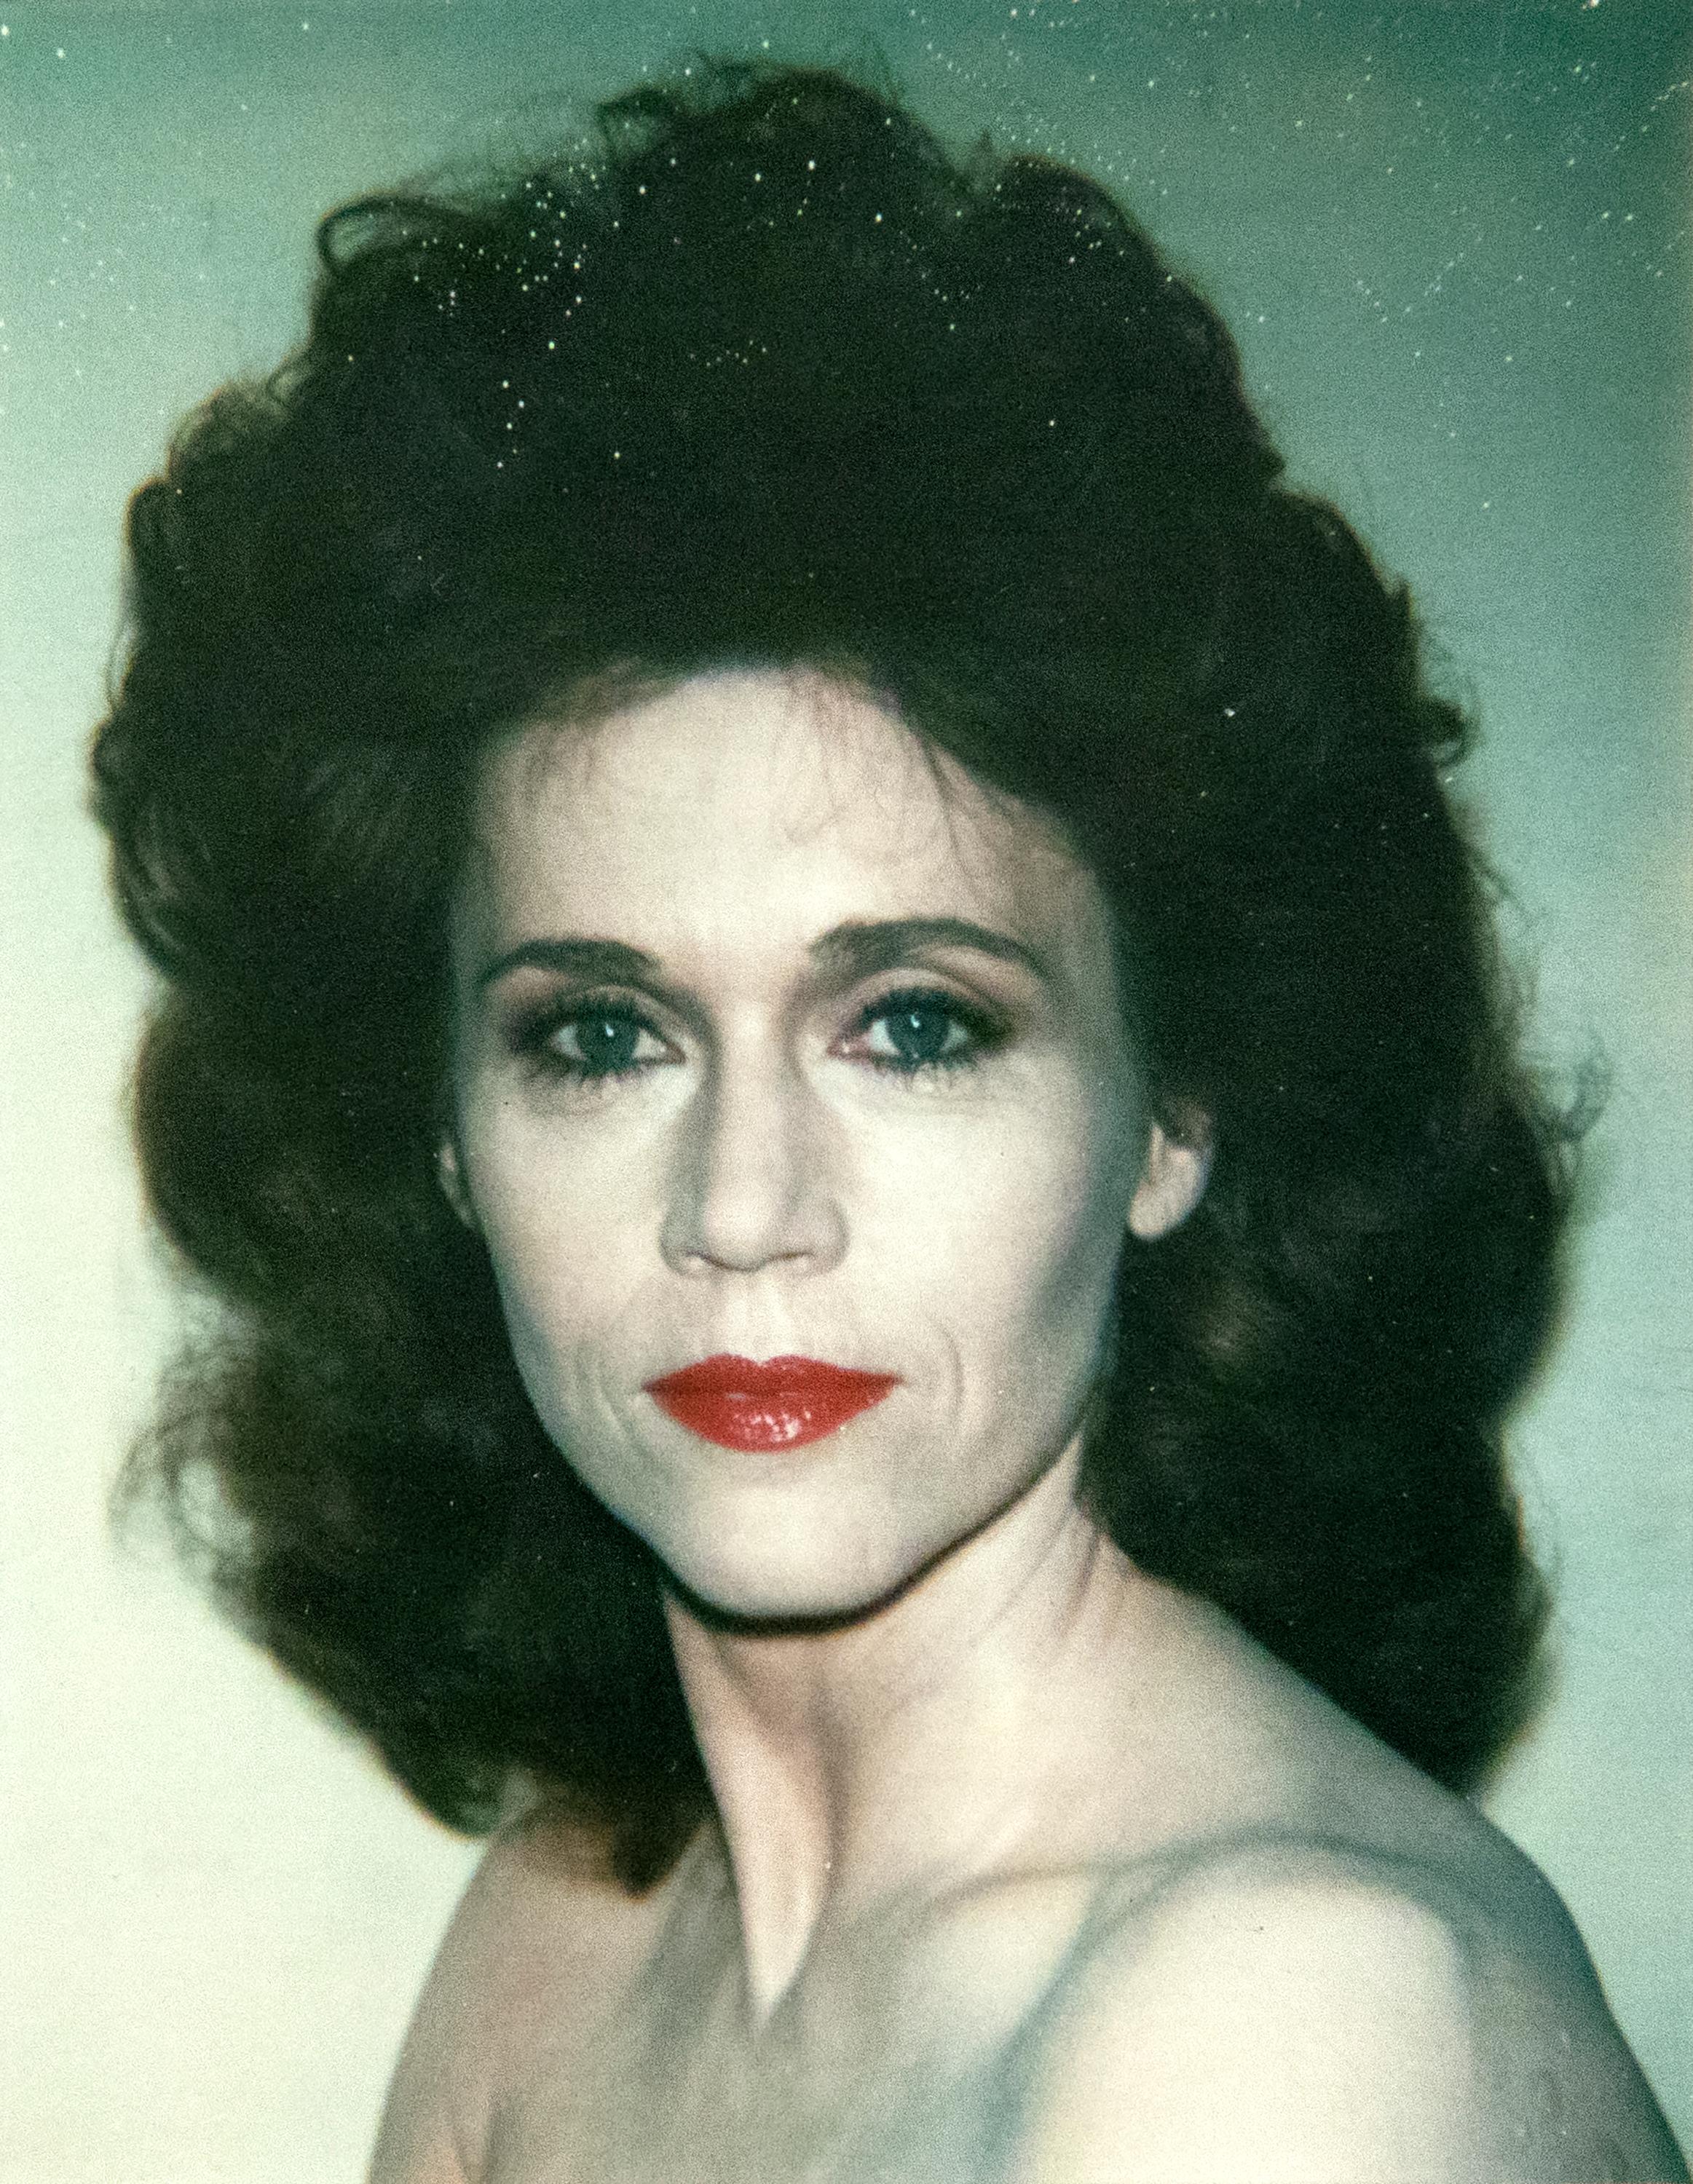 Andy Warhol Portrait Photograph - Jane Fonda